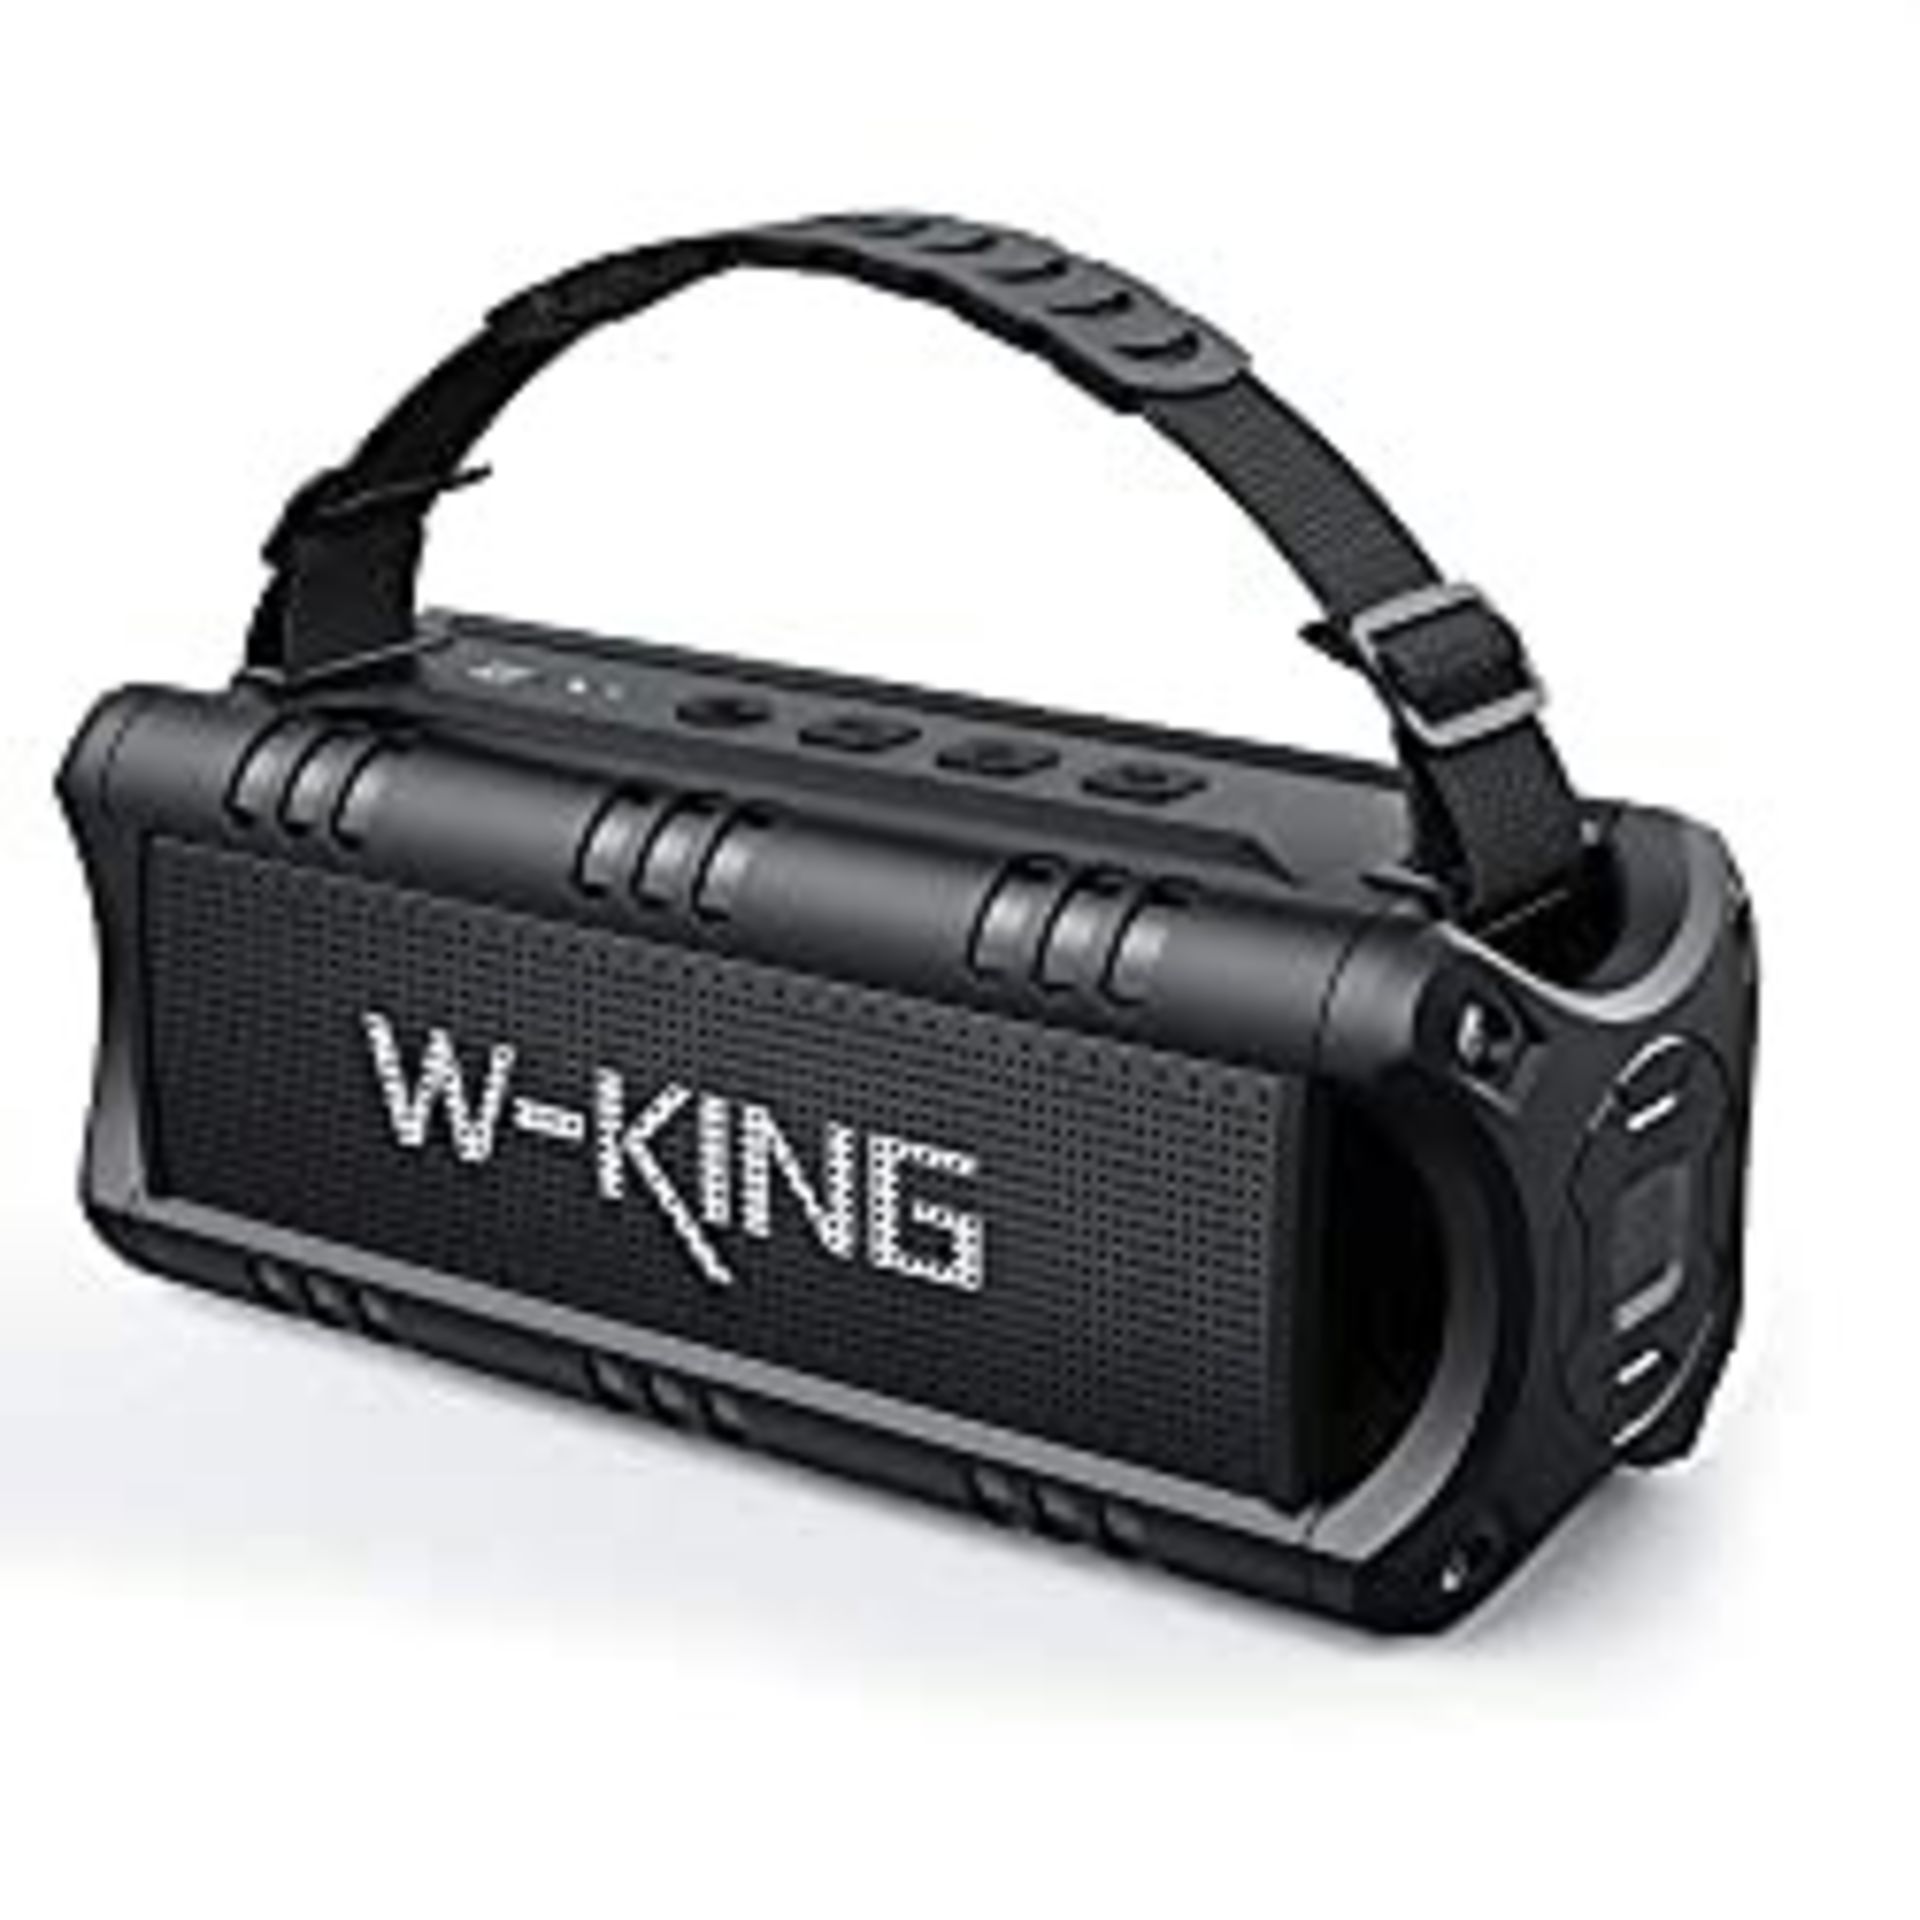 W-KING Bluetooth Speaker, 30W Portable Wireless Speakers Waterproof, 24 Hours Playtime, 5000mAh